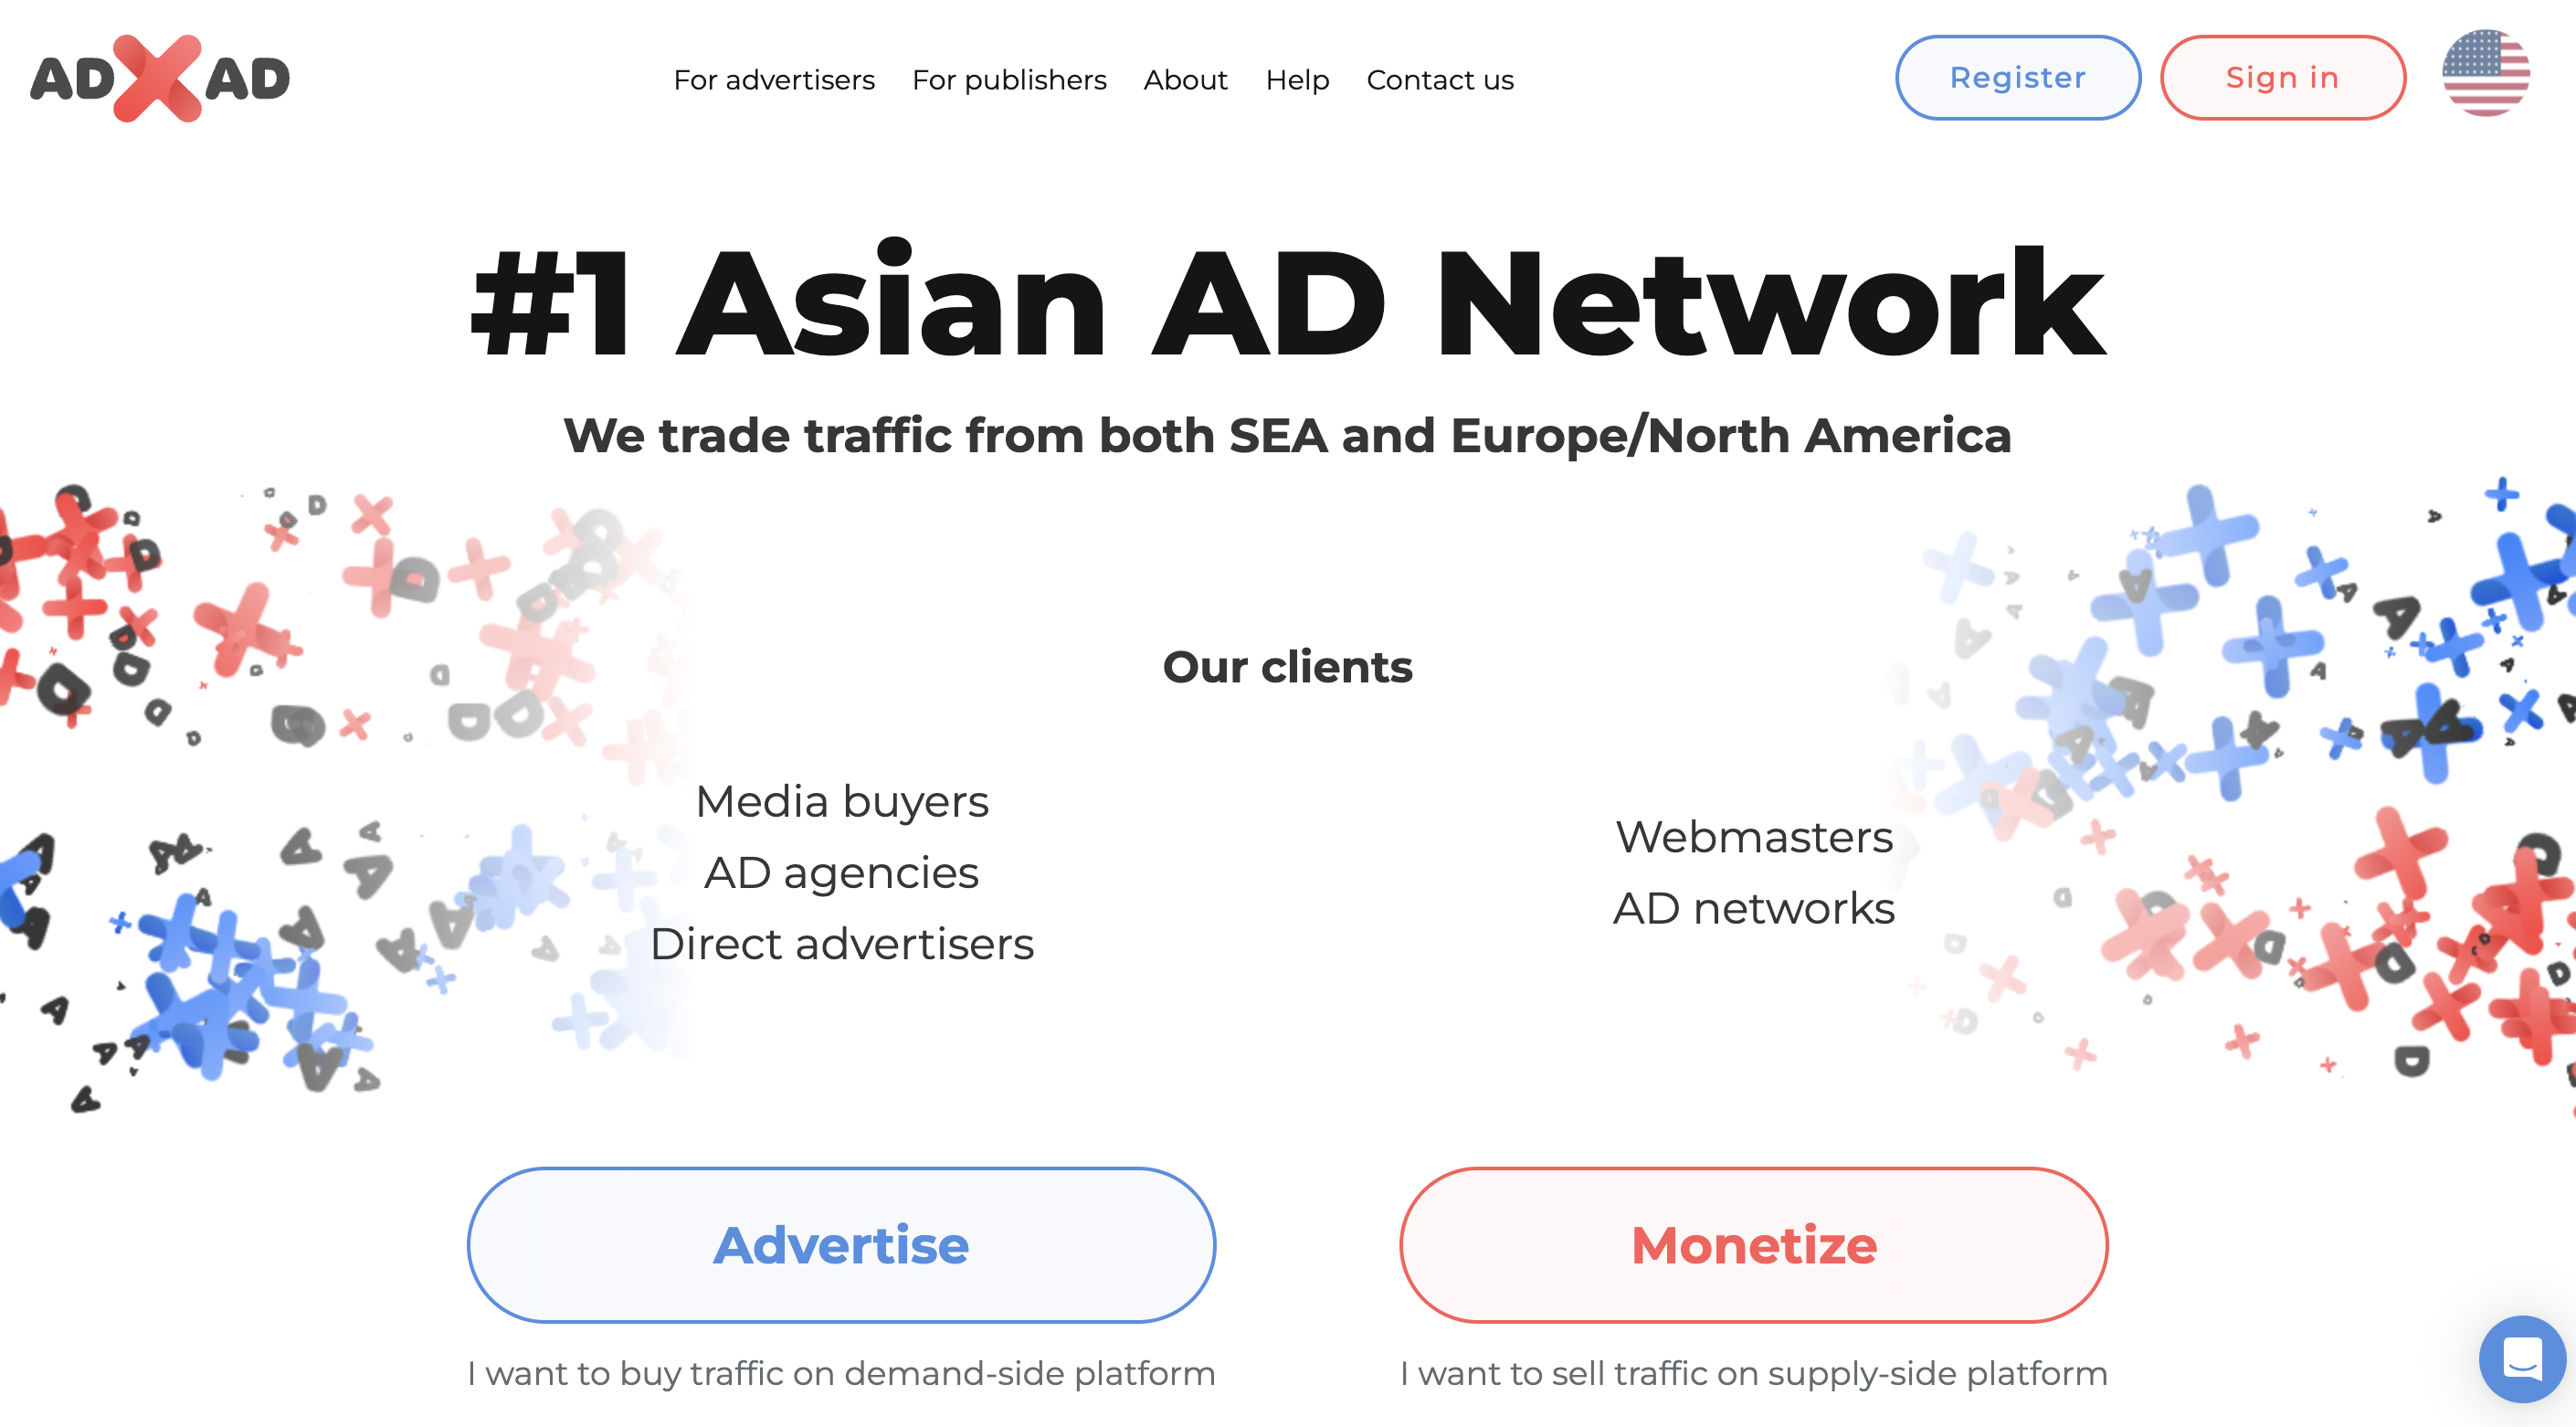 ADxAD AD Network